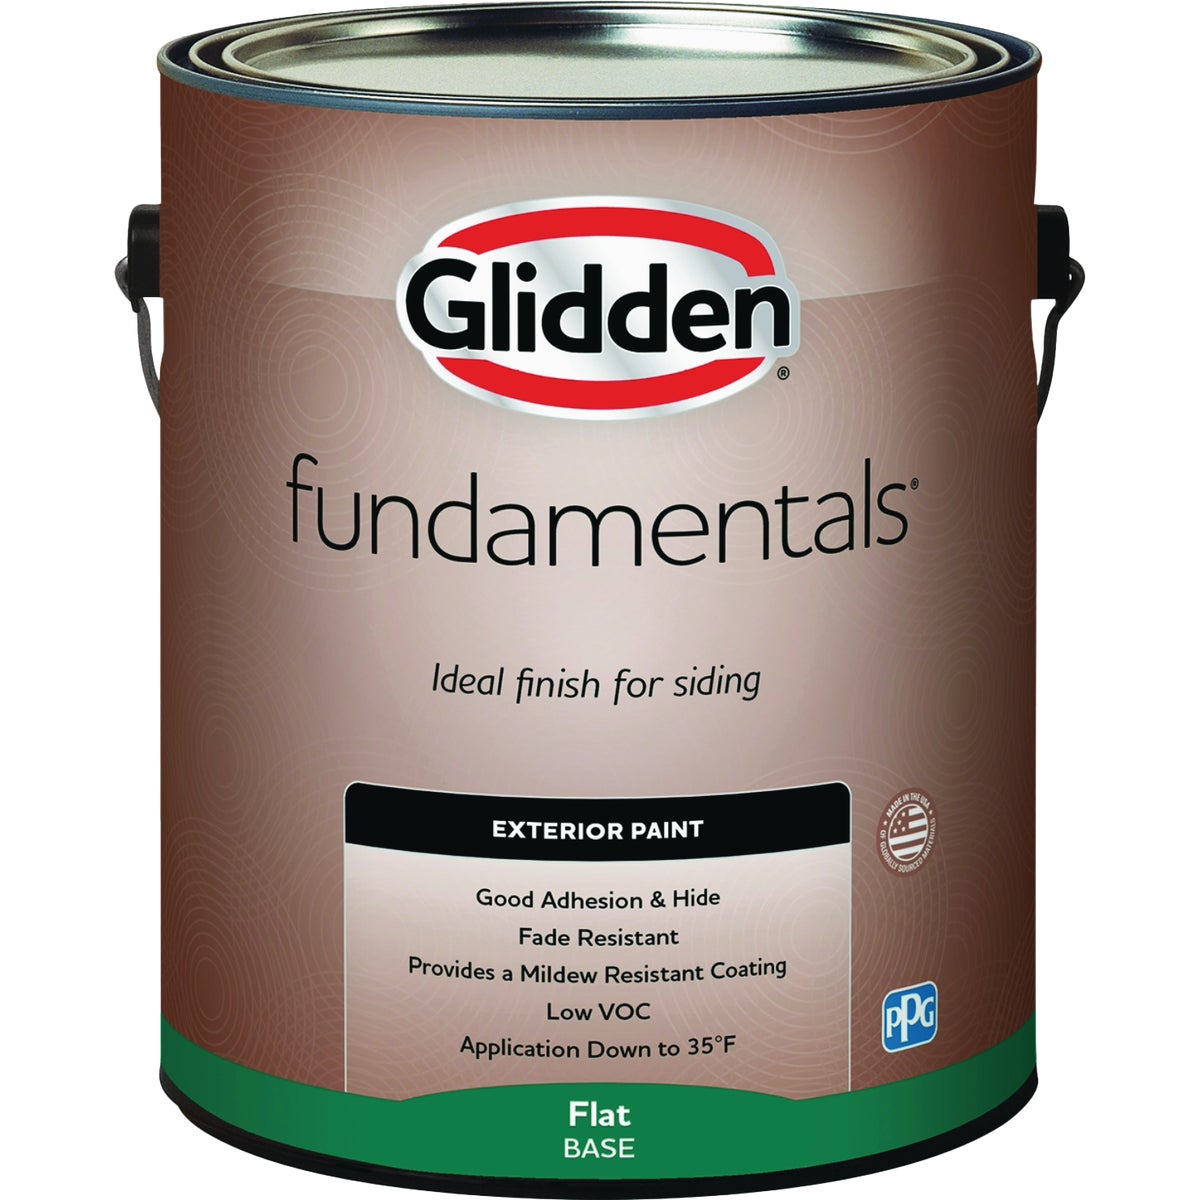 Glidden Fundamentals Exterior Paint Flat White Pastel Base Gallon